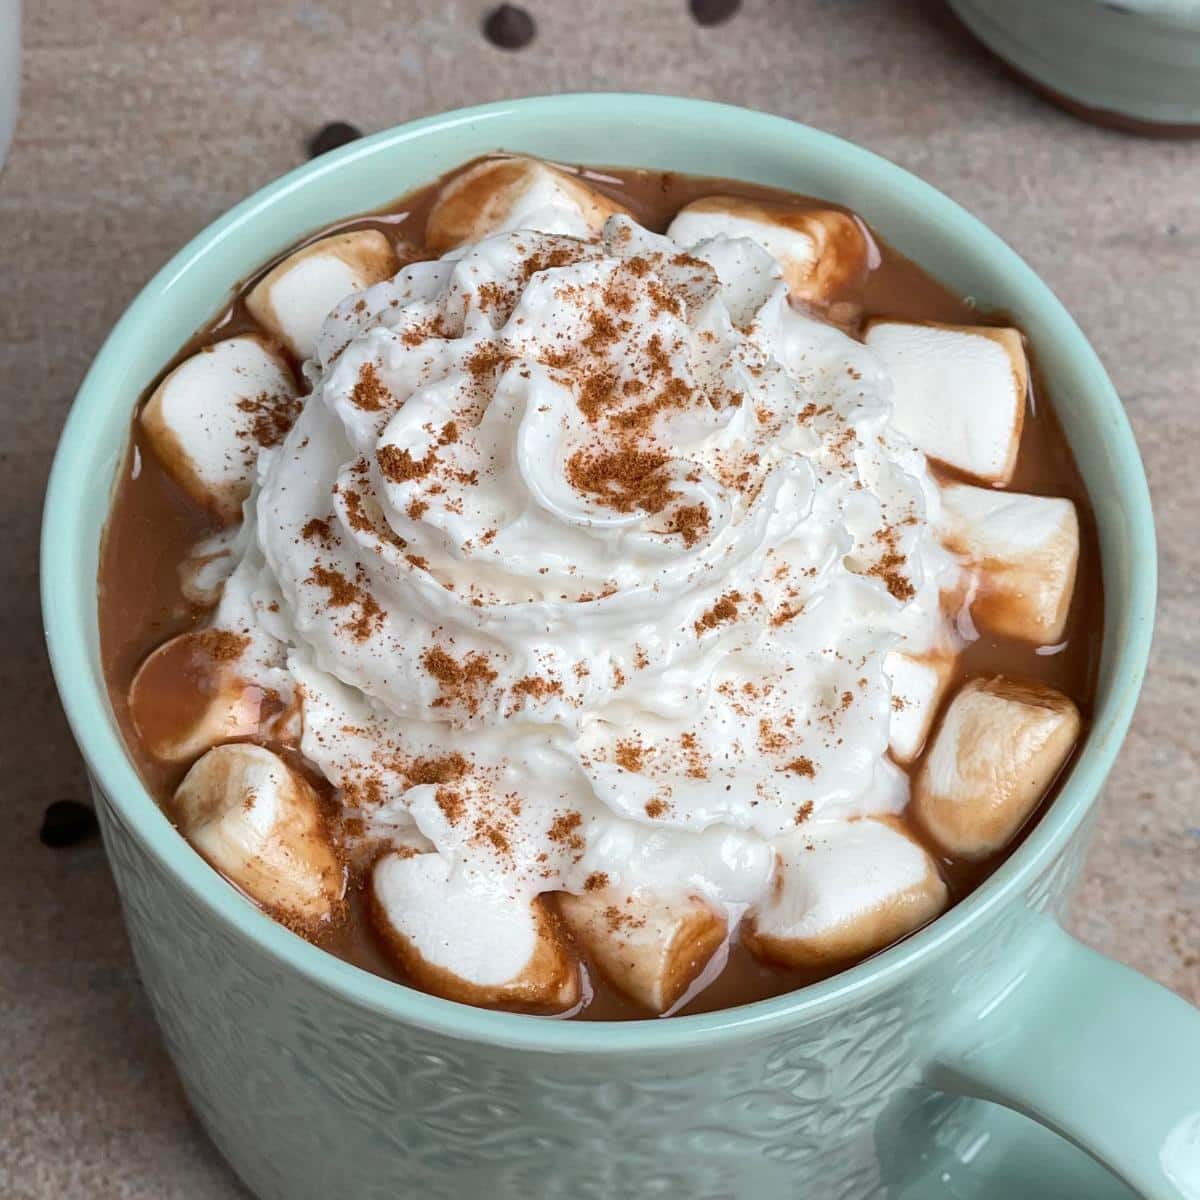 A mug with hot chocolate, whip cream, and marshmallows.